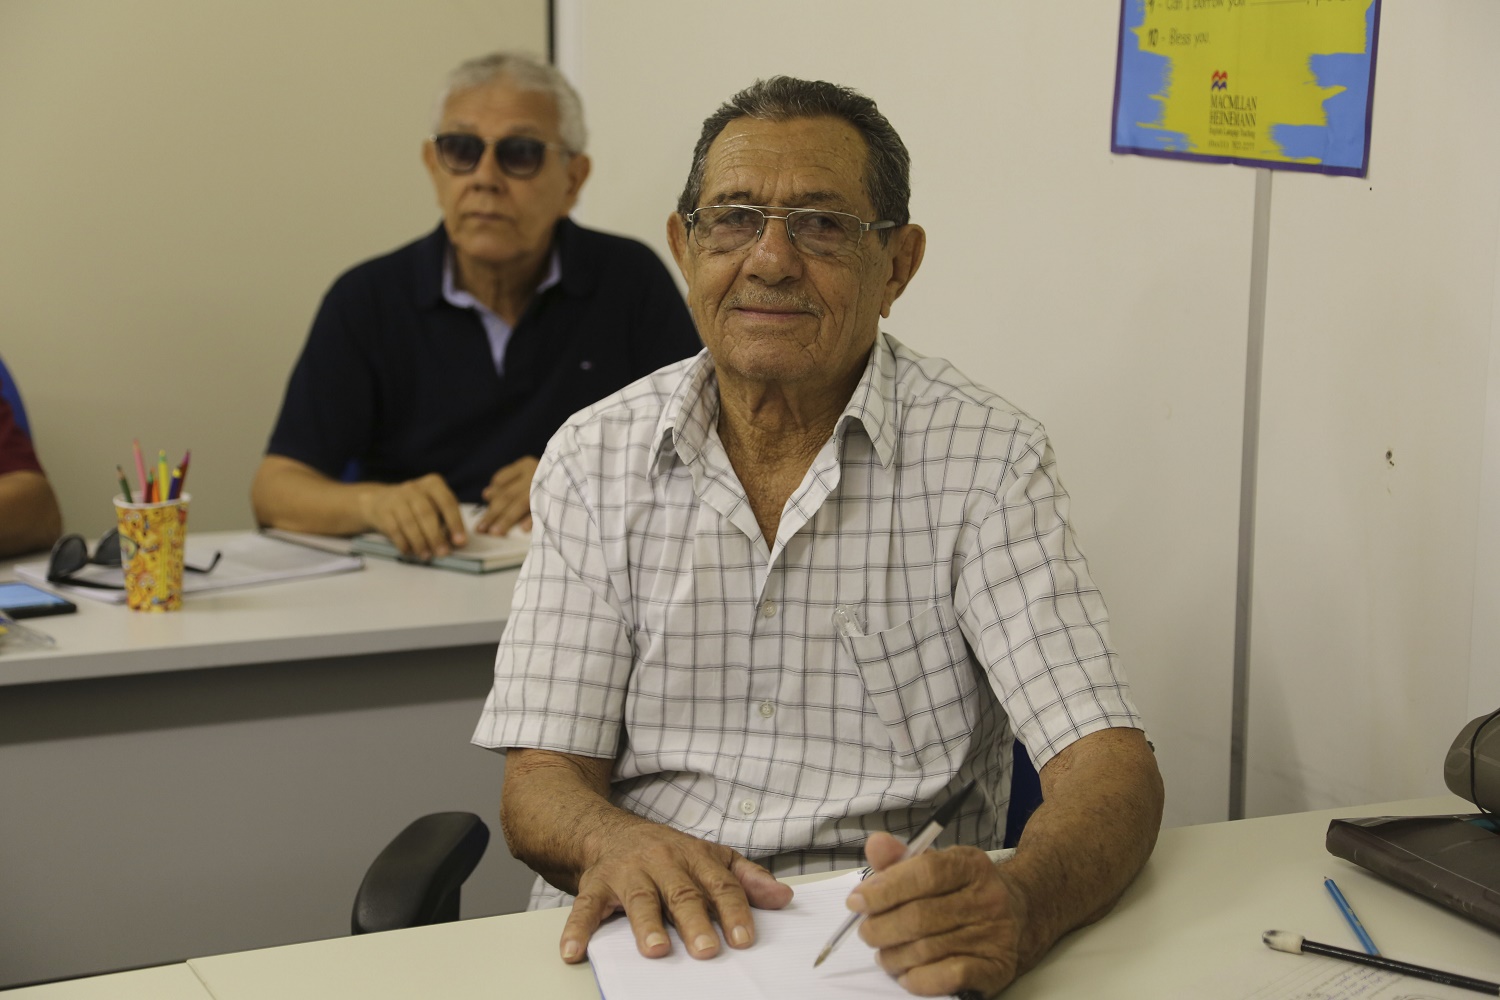 Seu José Araújo, 88 anos, entrou no projeto há seis anos. “Essa foi a primeira escola que entrei na vida”.